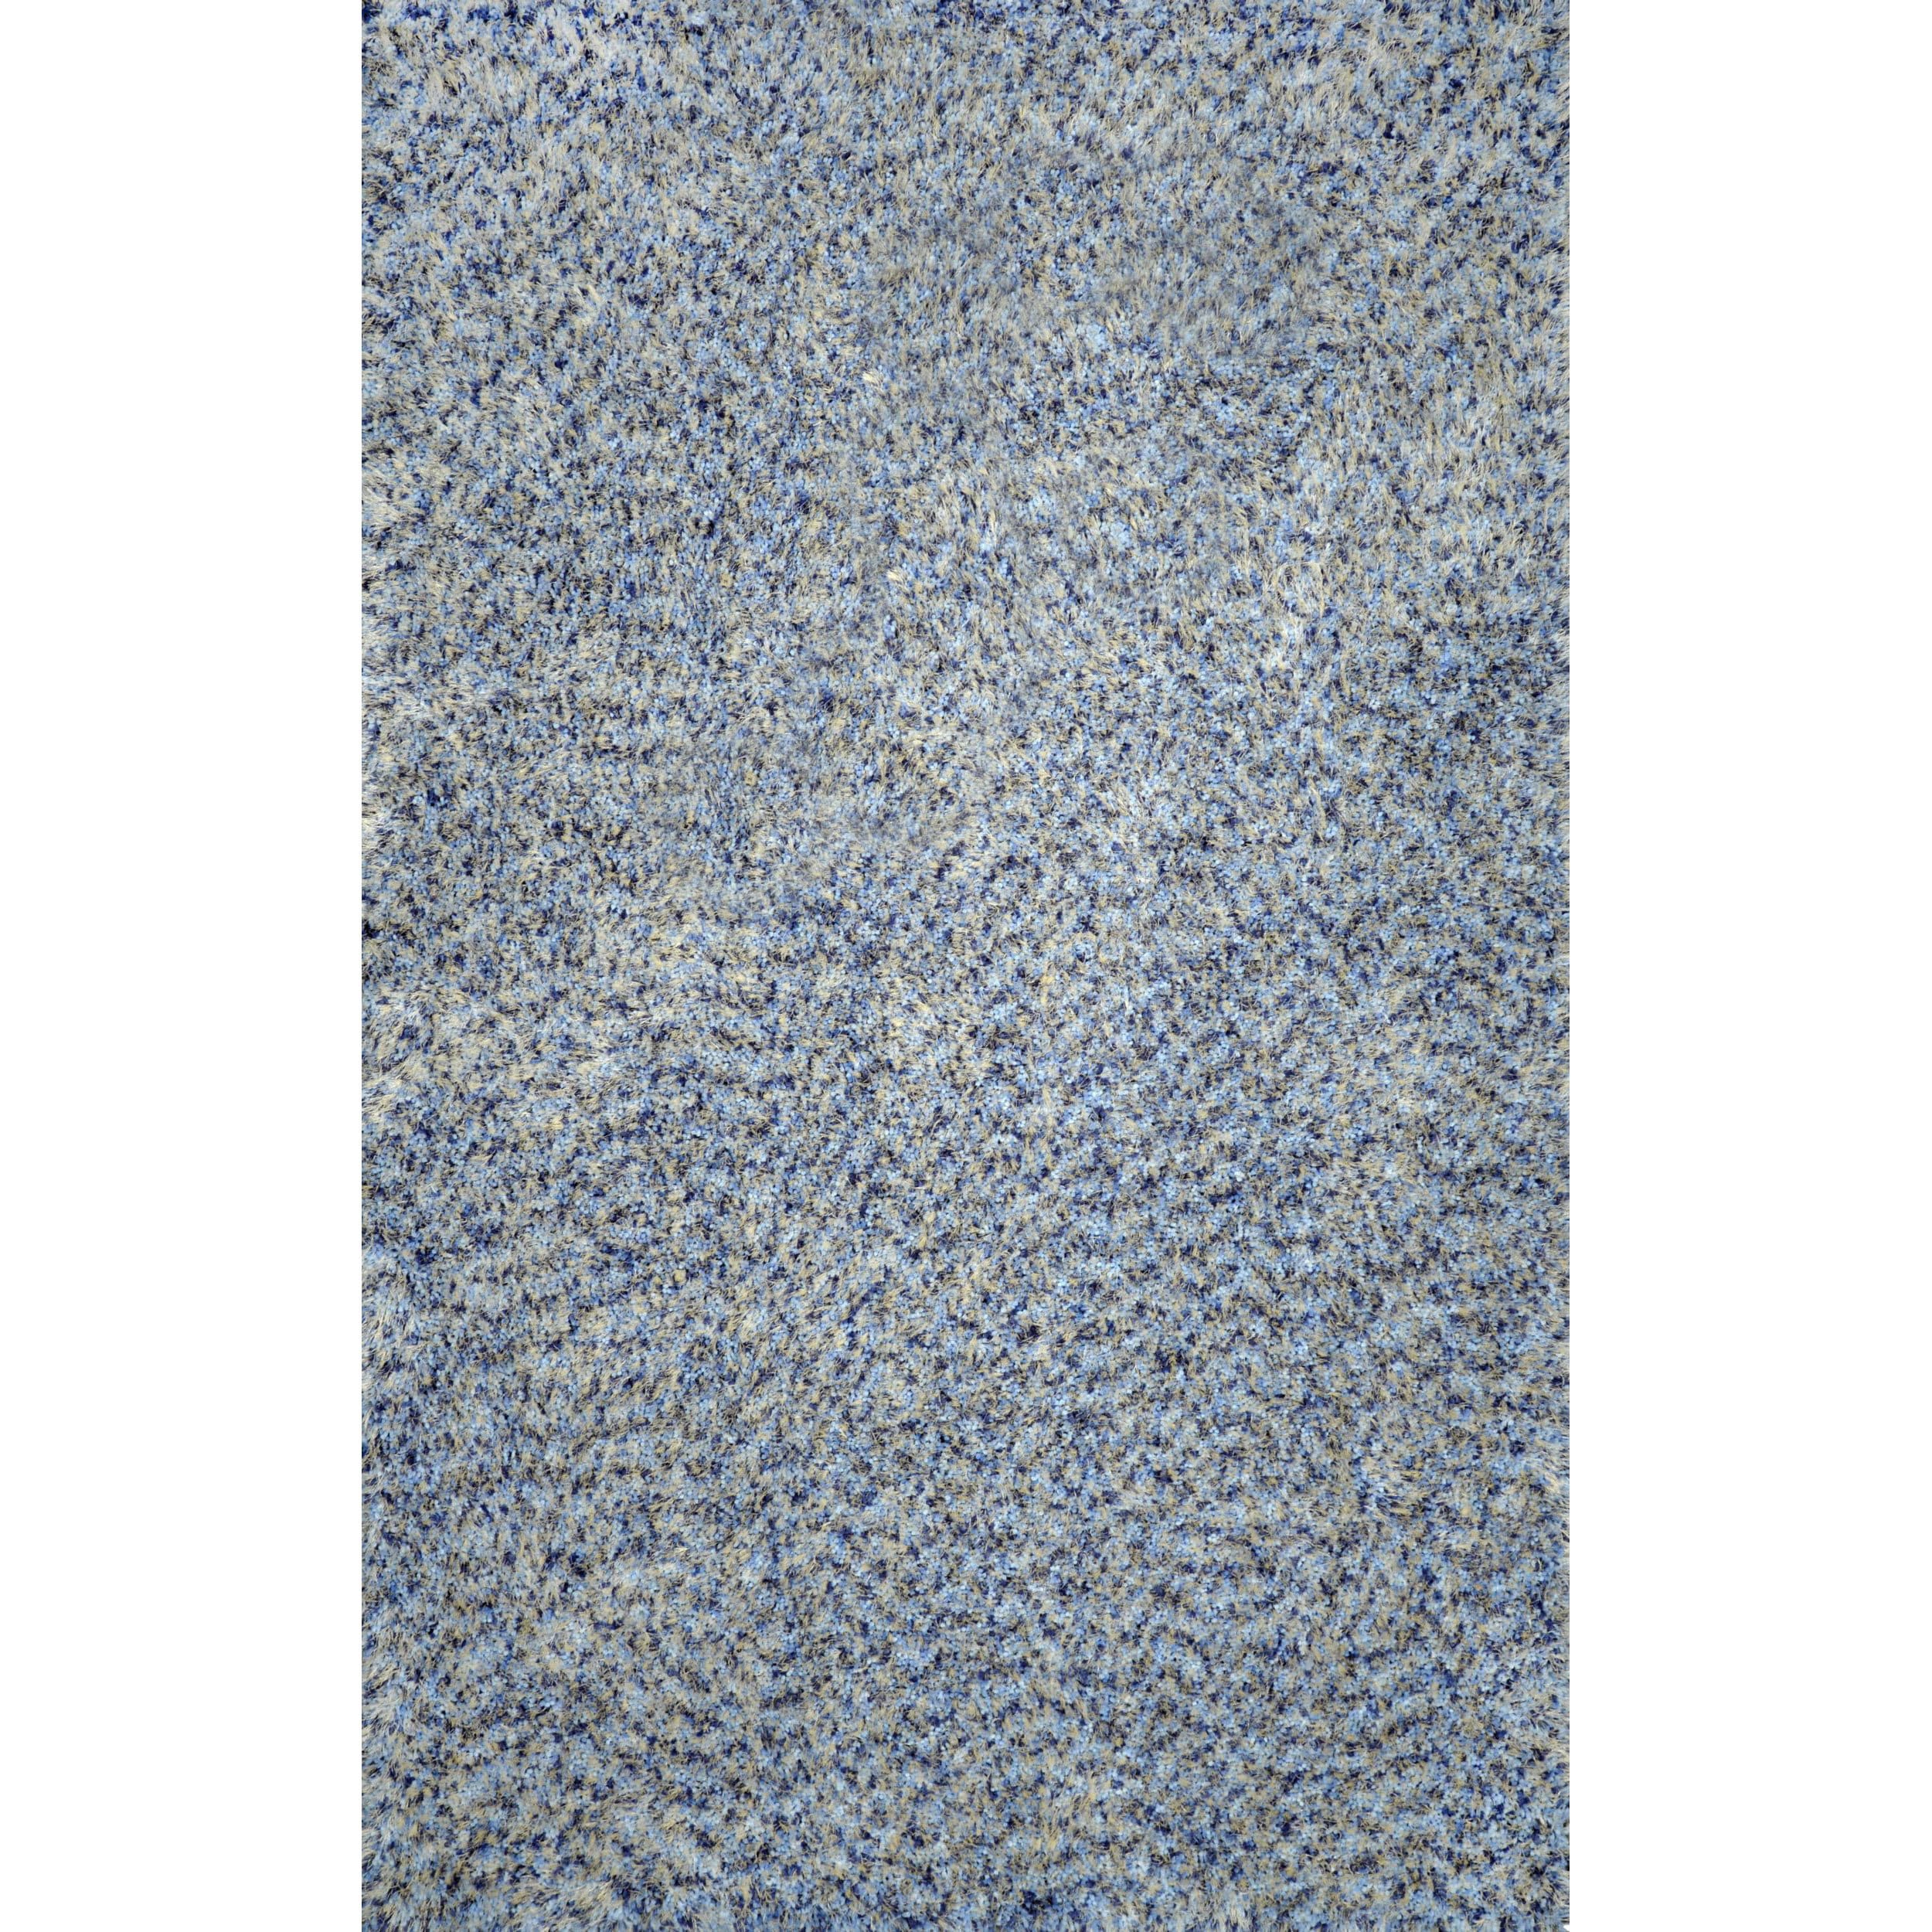 Nuloom Hand tufted Shag Blue Rug (7 6 X 9 6)